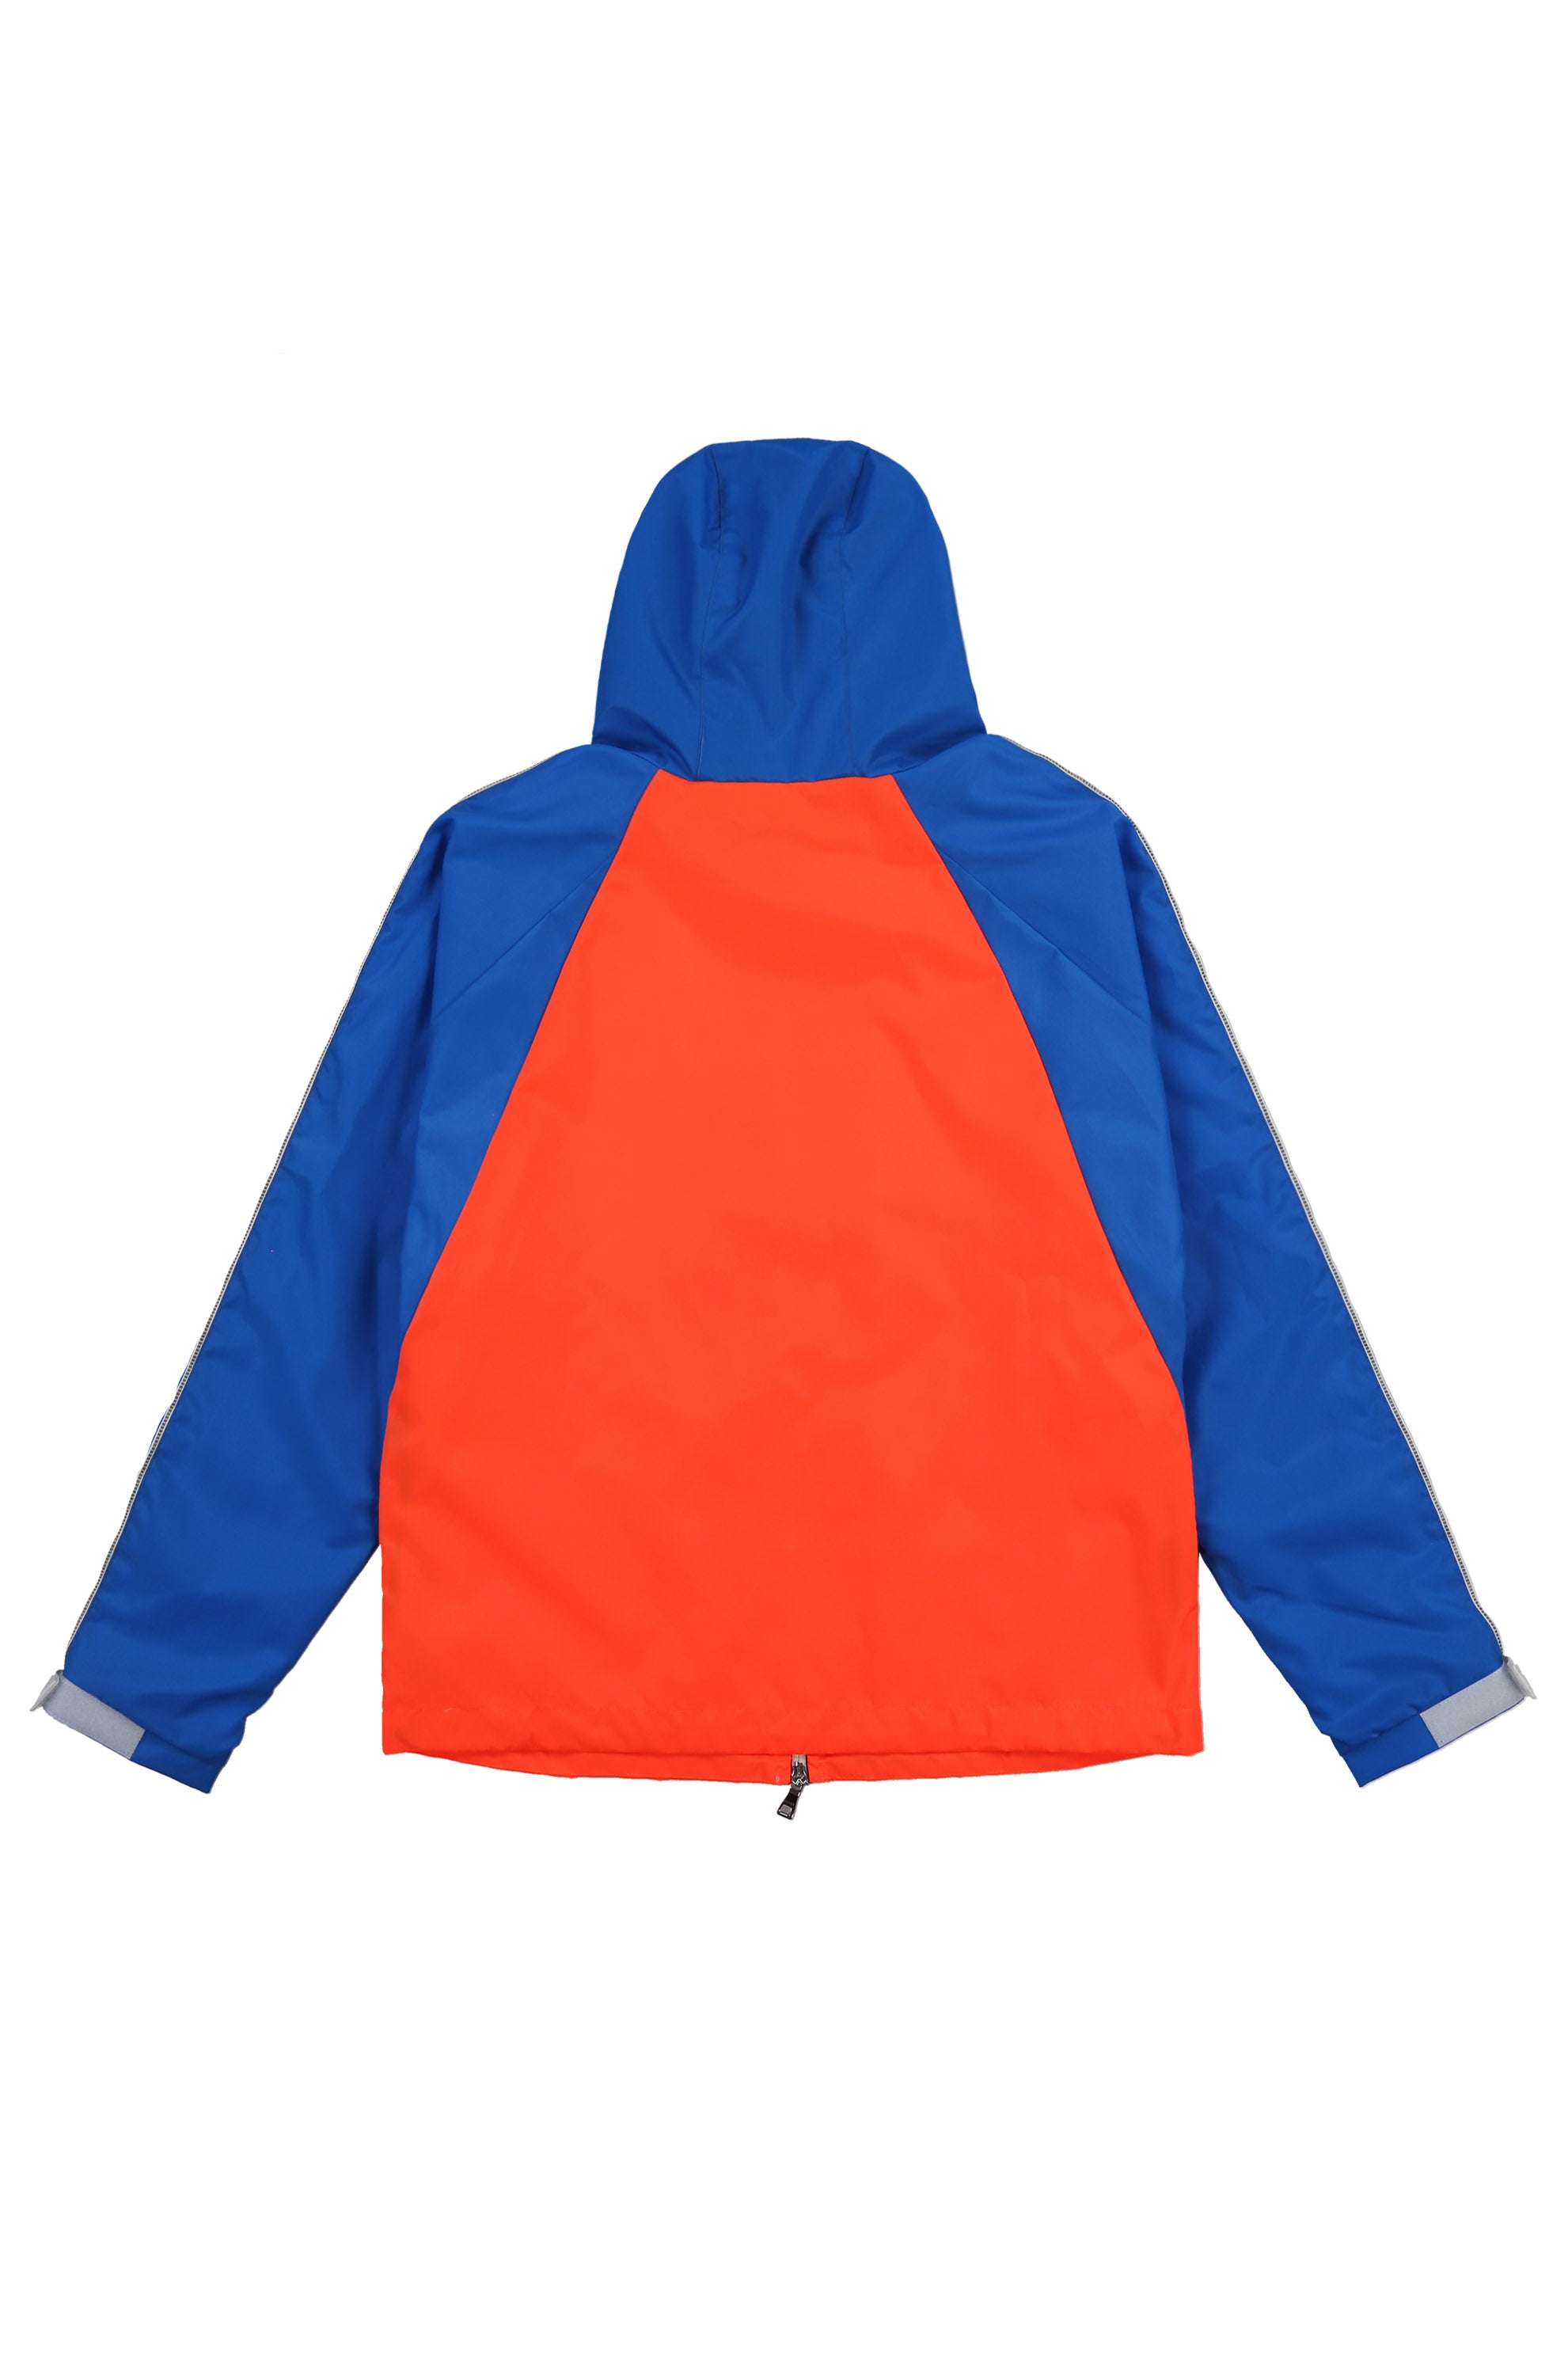 The Orange Jacket in Jumpin Blue ~ Windthrow